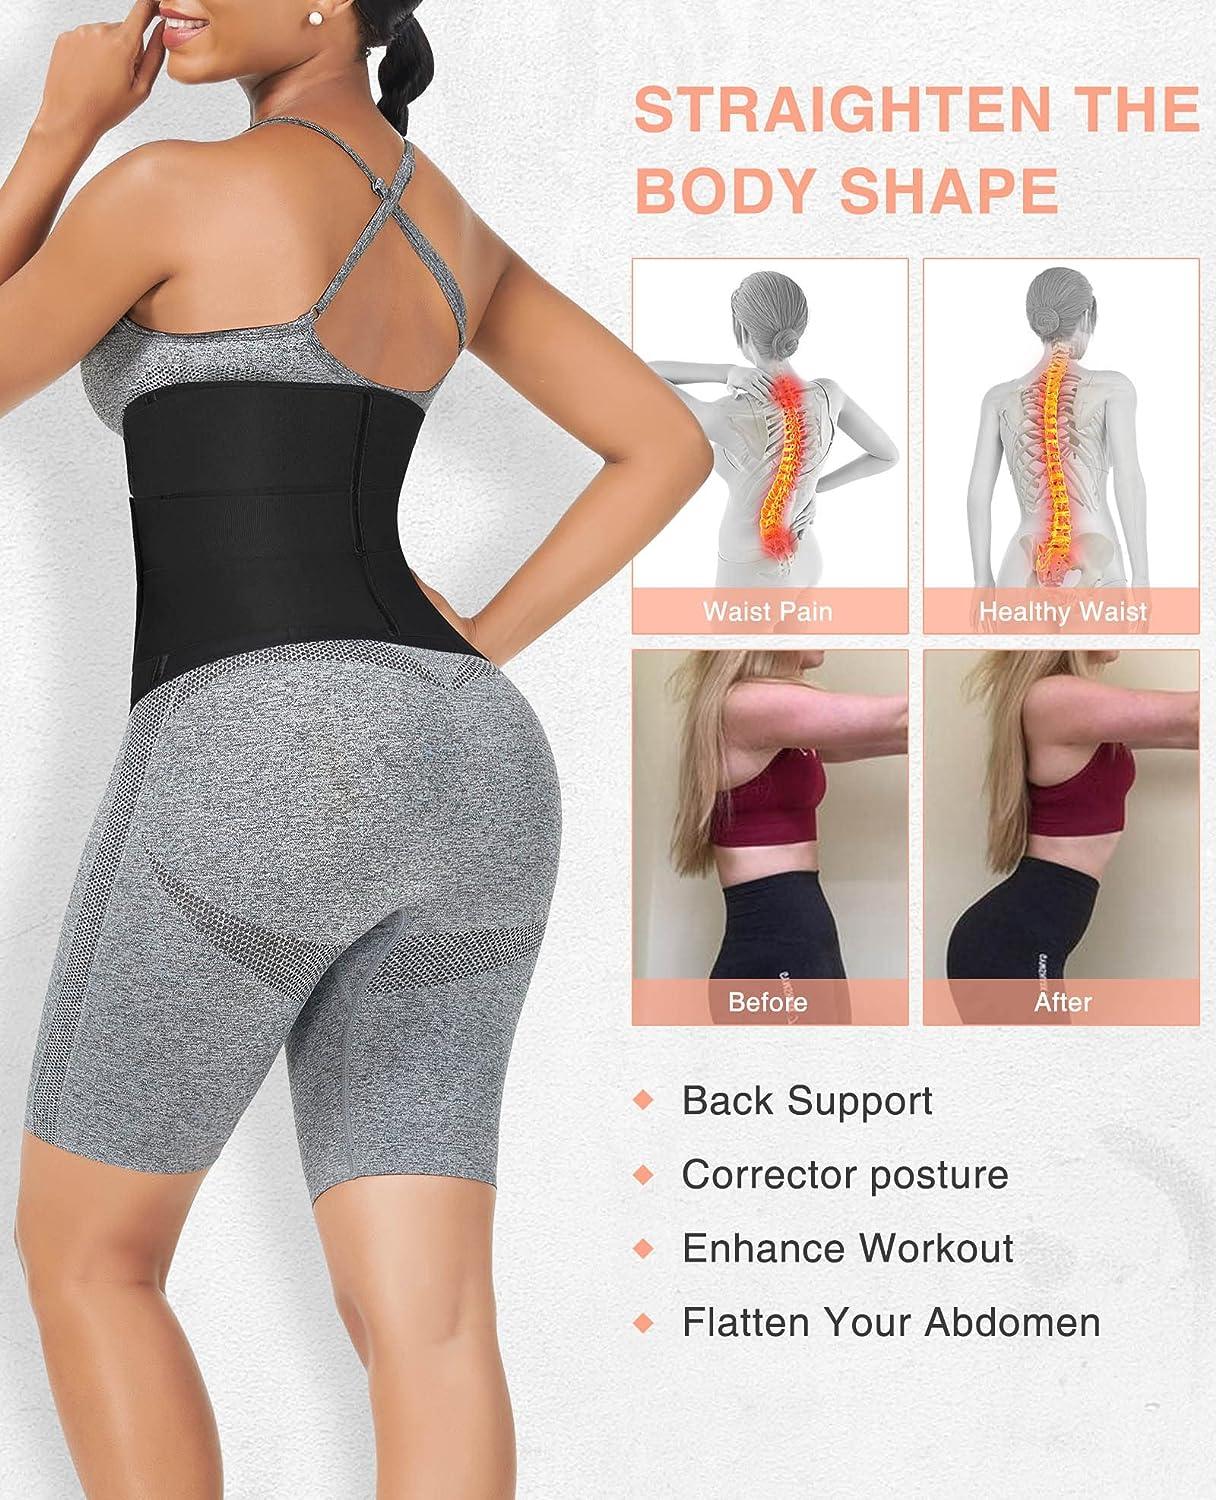 Comfortable FeelinGirl Body Shaper for Women | Tummy Control & Posture  Correction Shapewear